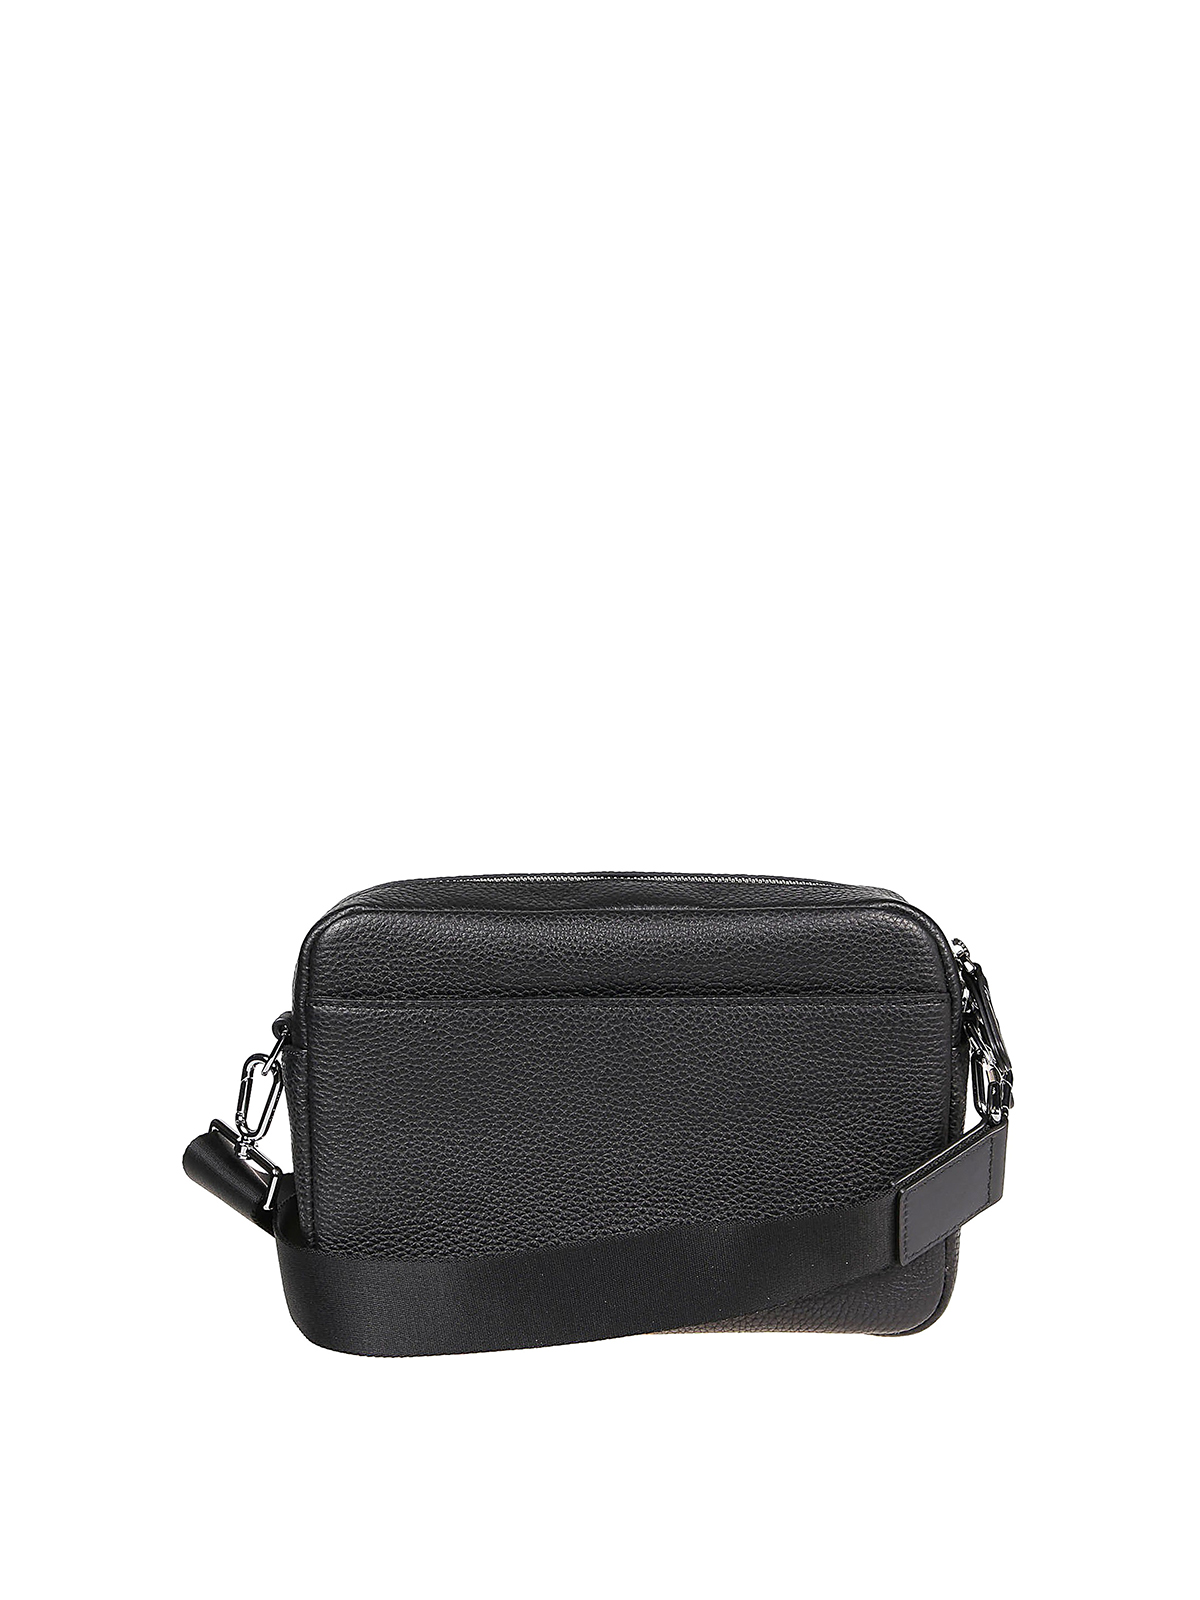 Cross body bags Michael Kors - Hudson leather messenger bag - 33S0LHDC5L001